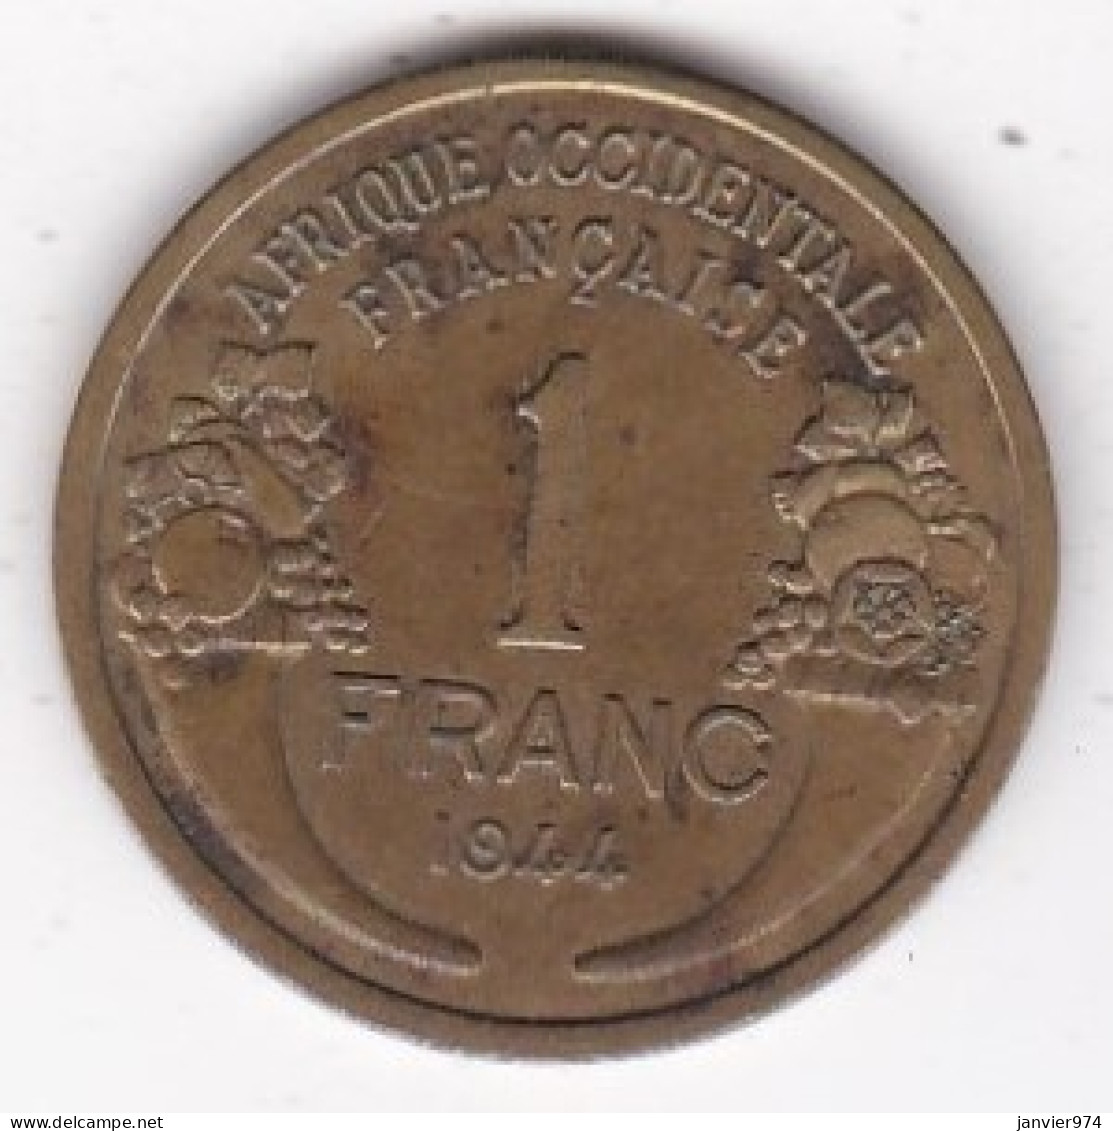 Afrique Occidentale Française. AOF. 1 Franc 1944. Bronze Aluminium. Lec# 2 - Africa Occidentale Francese